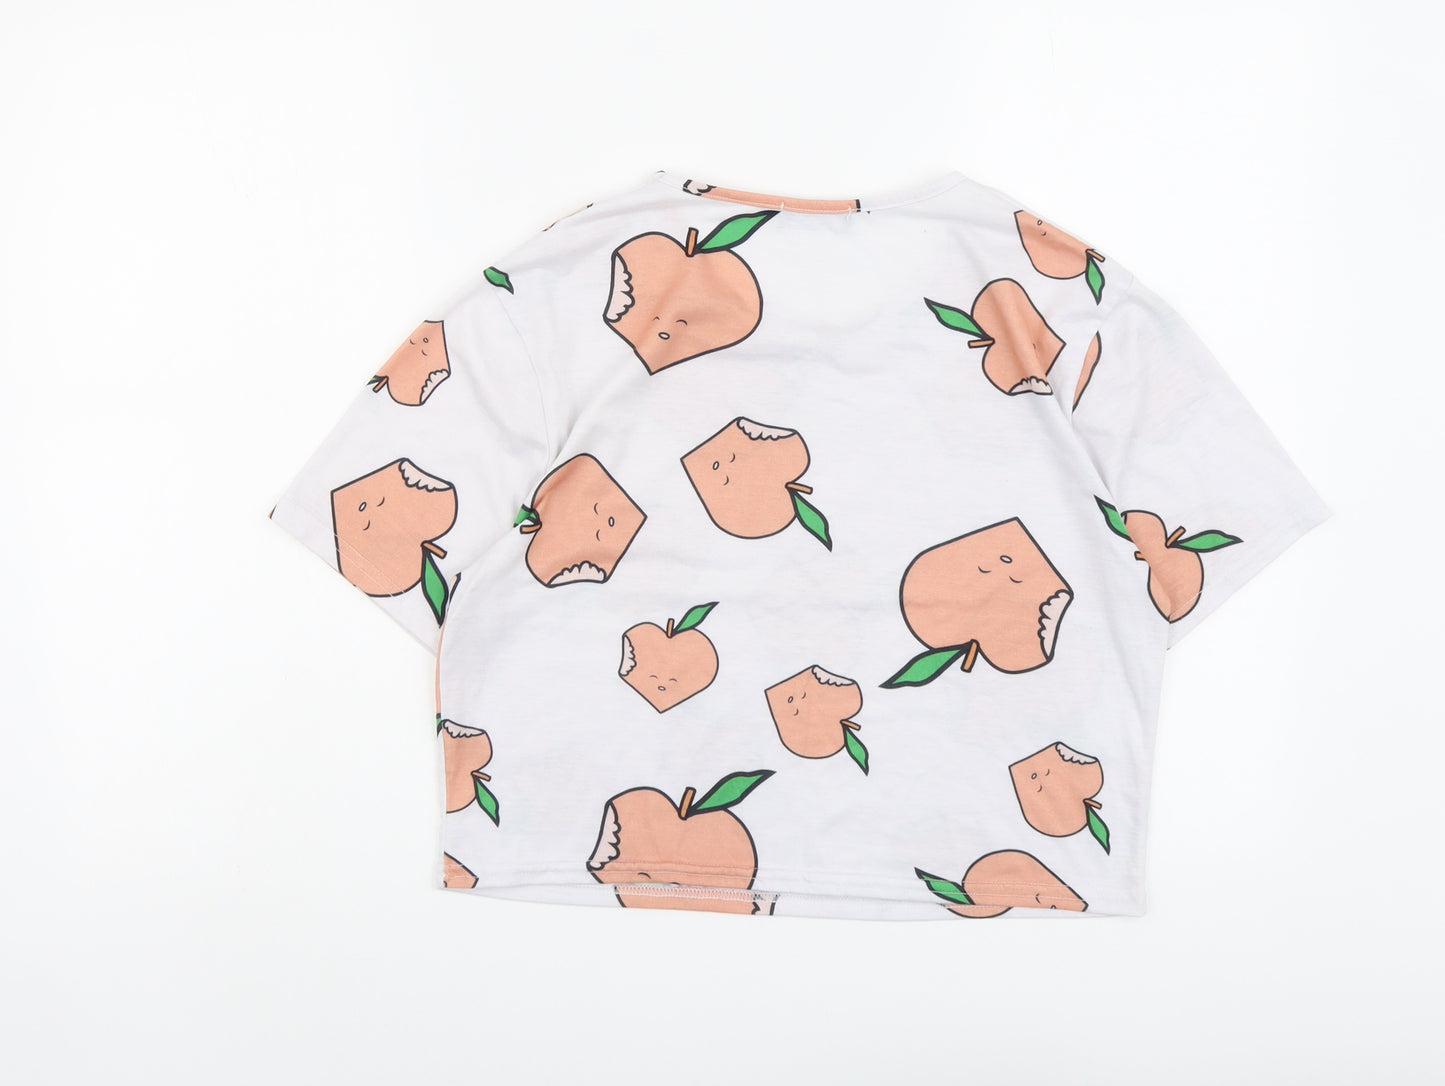 PRETTYLITTLETHING Womens White Geometric Polyester Basic T-Shirt Size S Round Neck - Apple Print